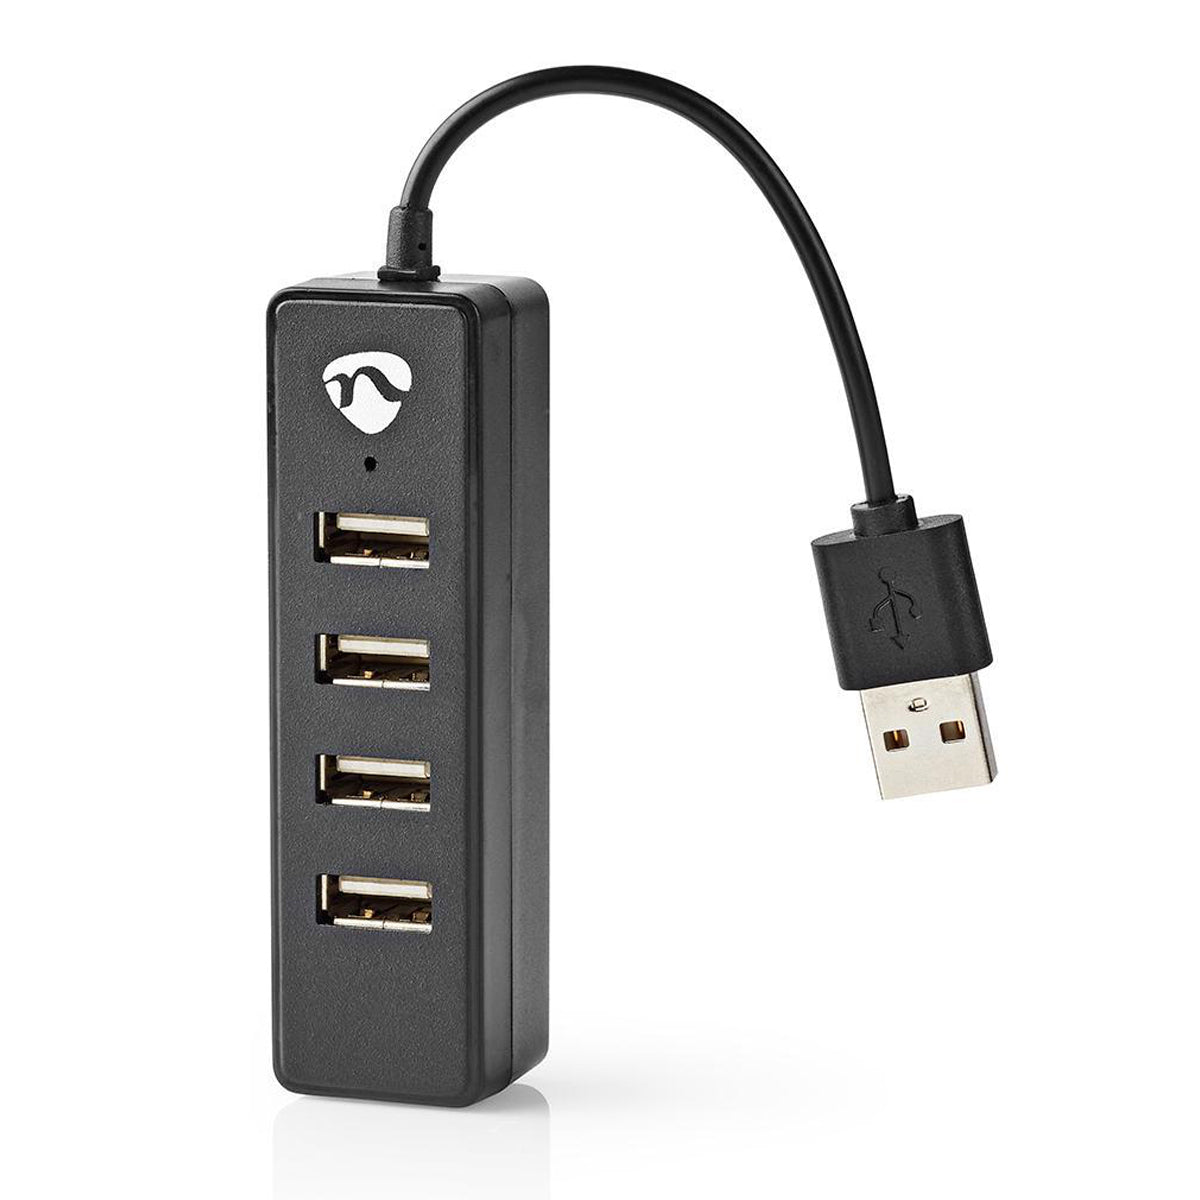 Nedis USB 2.0 multiport hub, 4 USB-A input ports, plug&amp;play, USB power strip